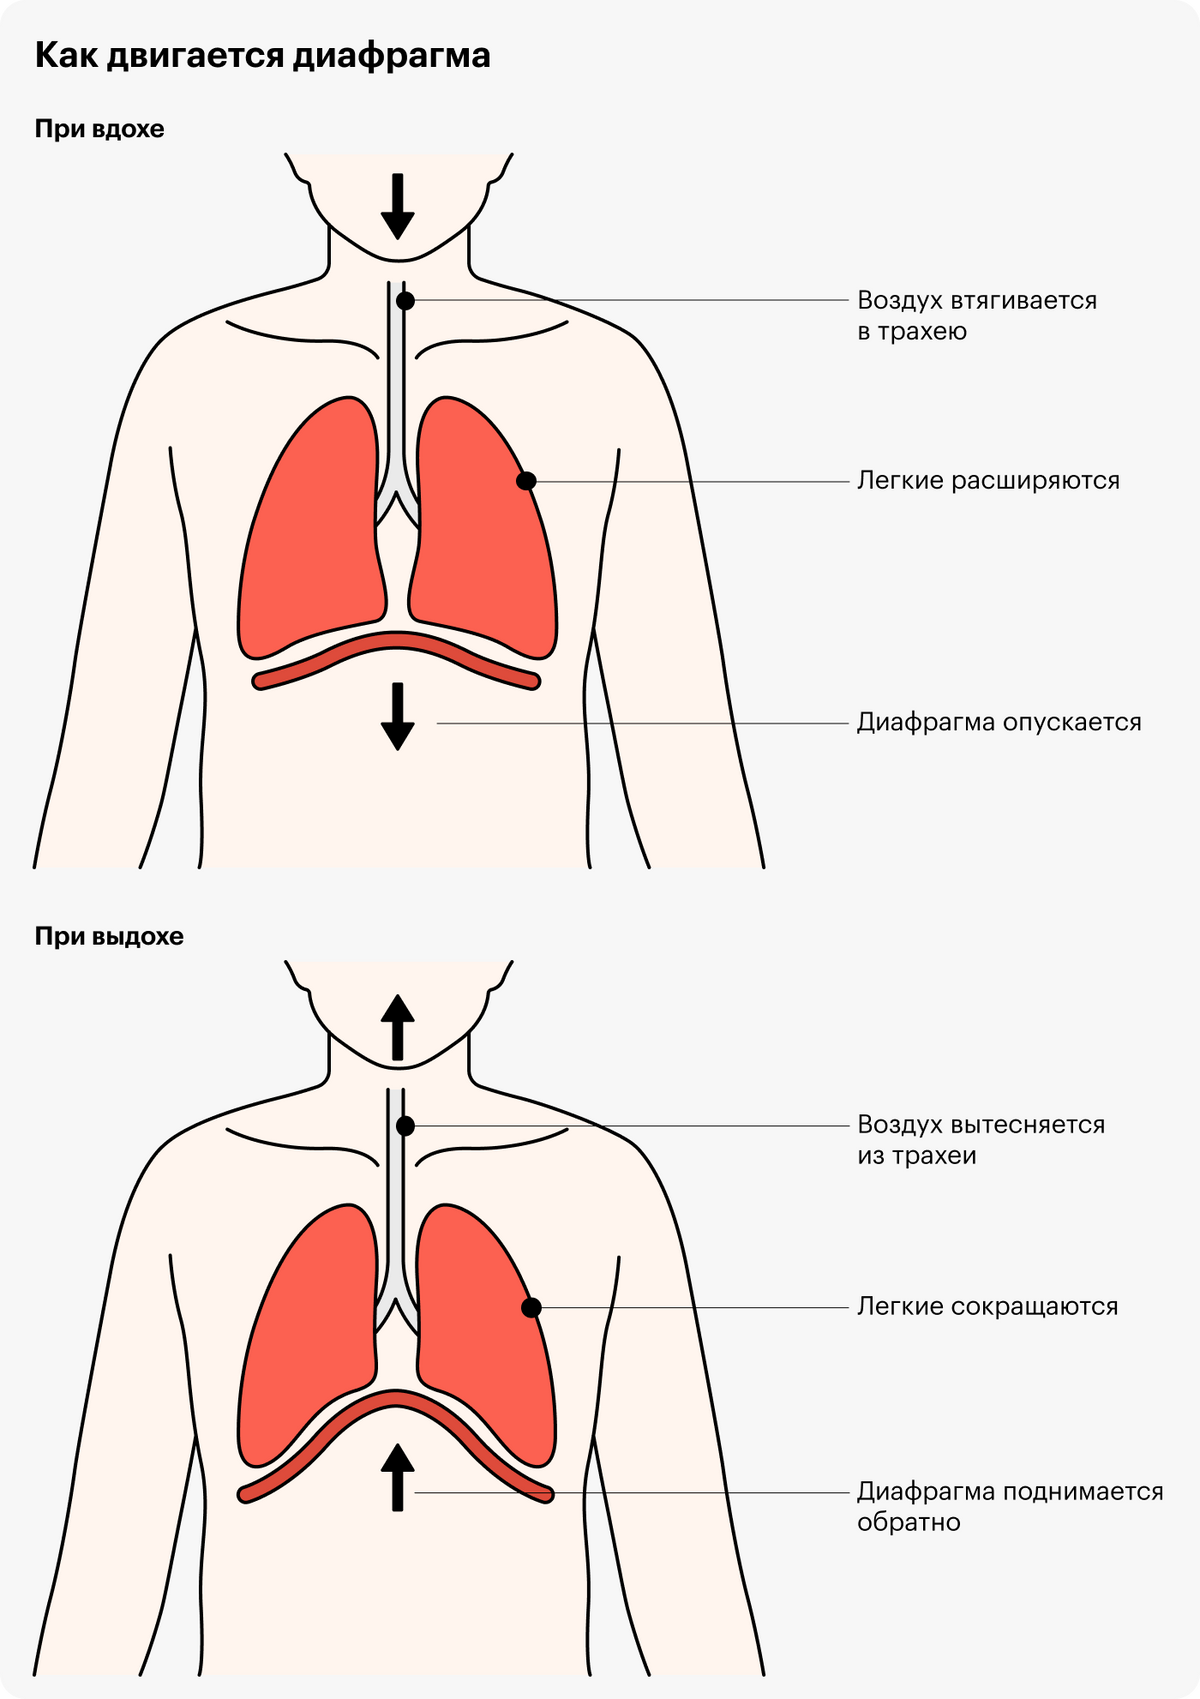 Источник:&nbsp;Asthma&nbsp;+&nbsp;Lung&nbsp;UK